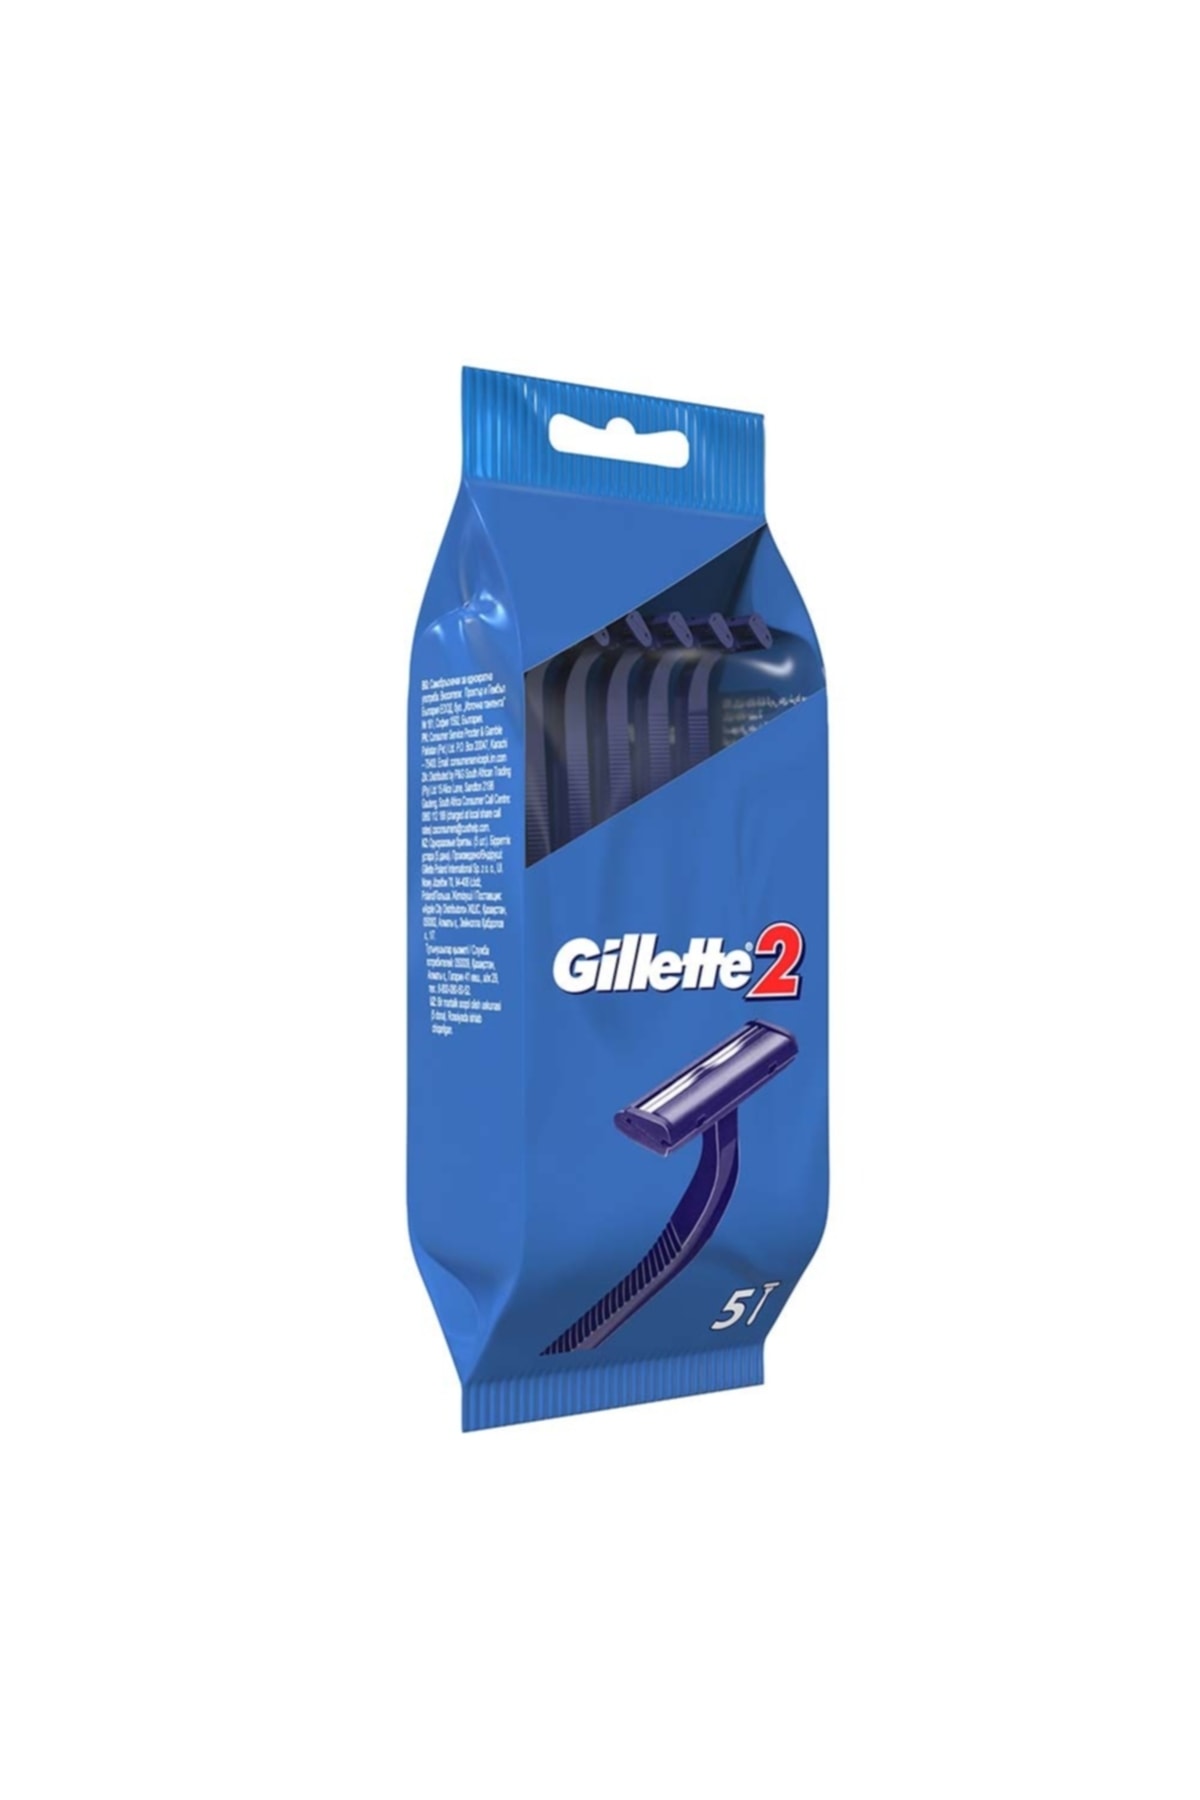 Gillette 2 Tıraş Bıçağı 5'li Poşet